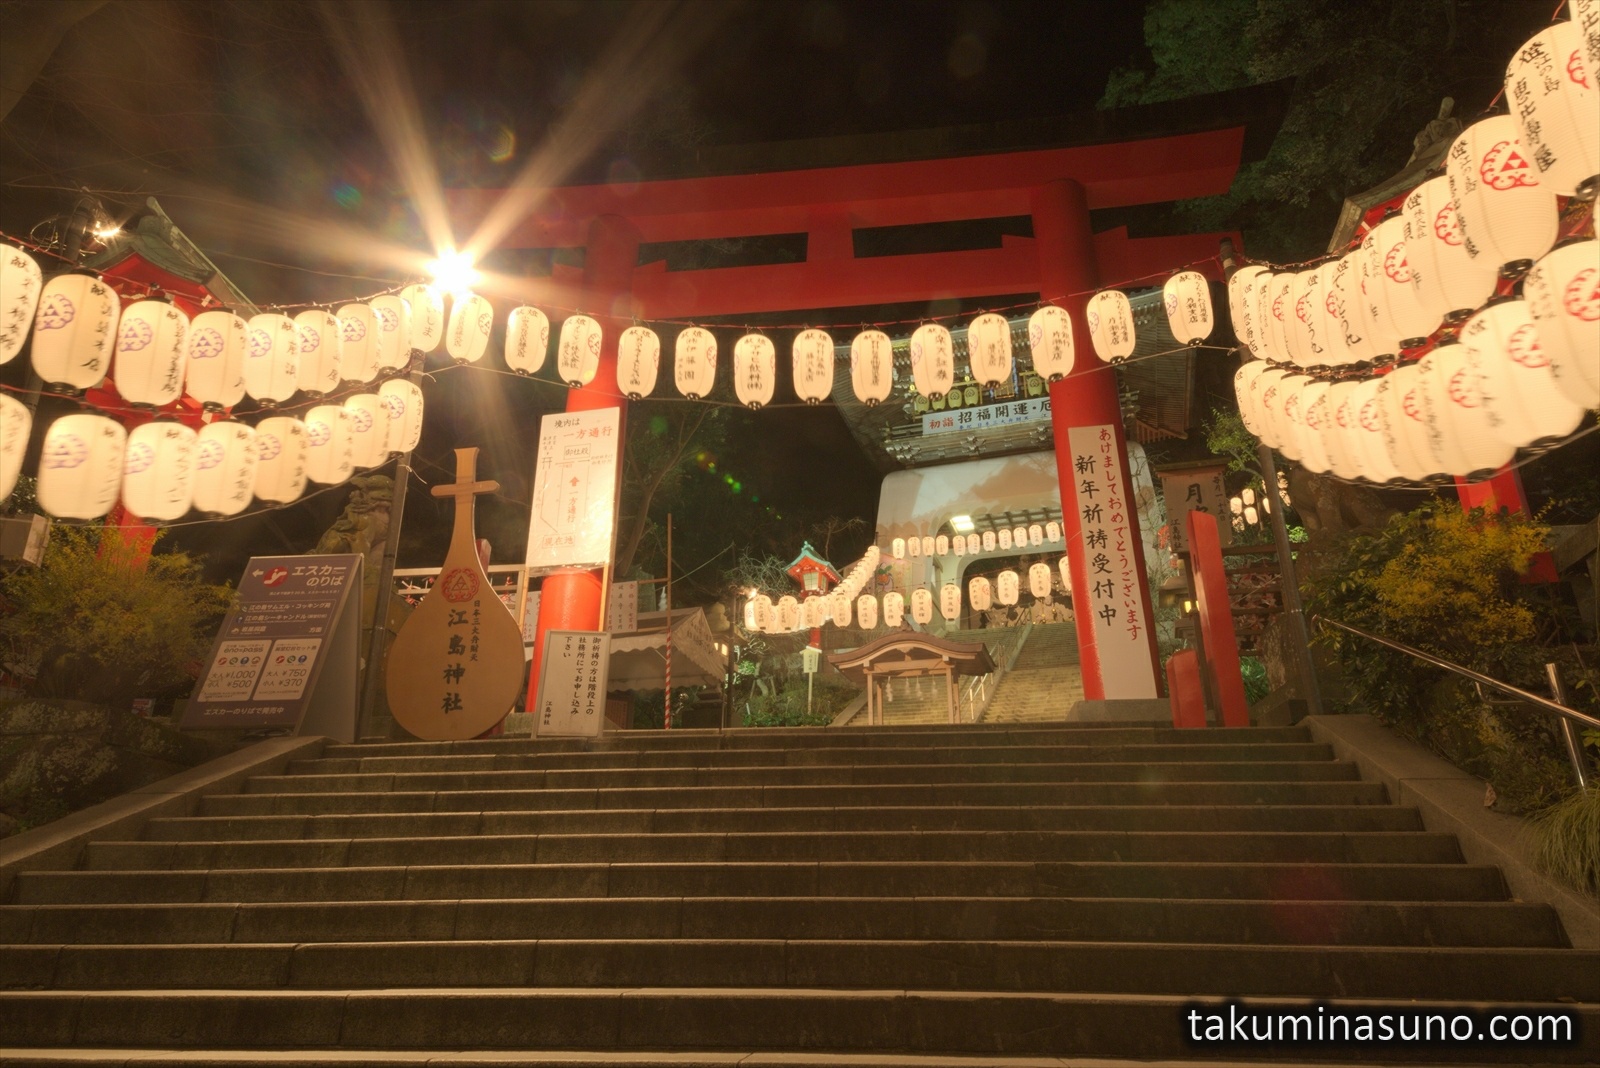 Lanterns of Enoshima Island